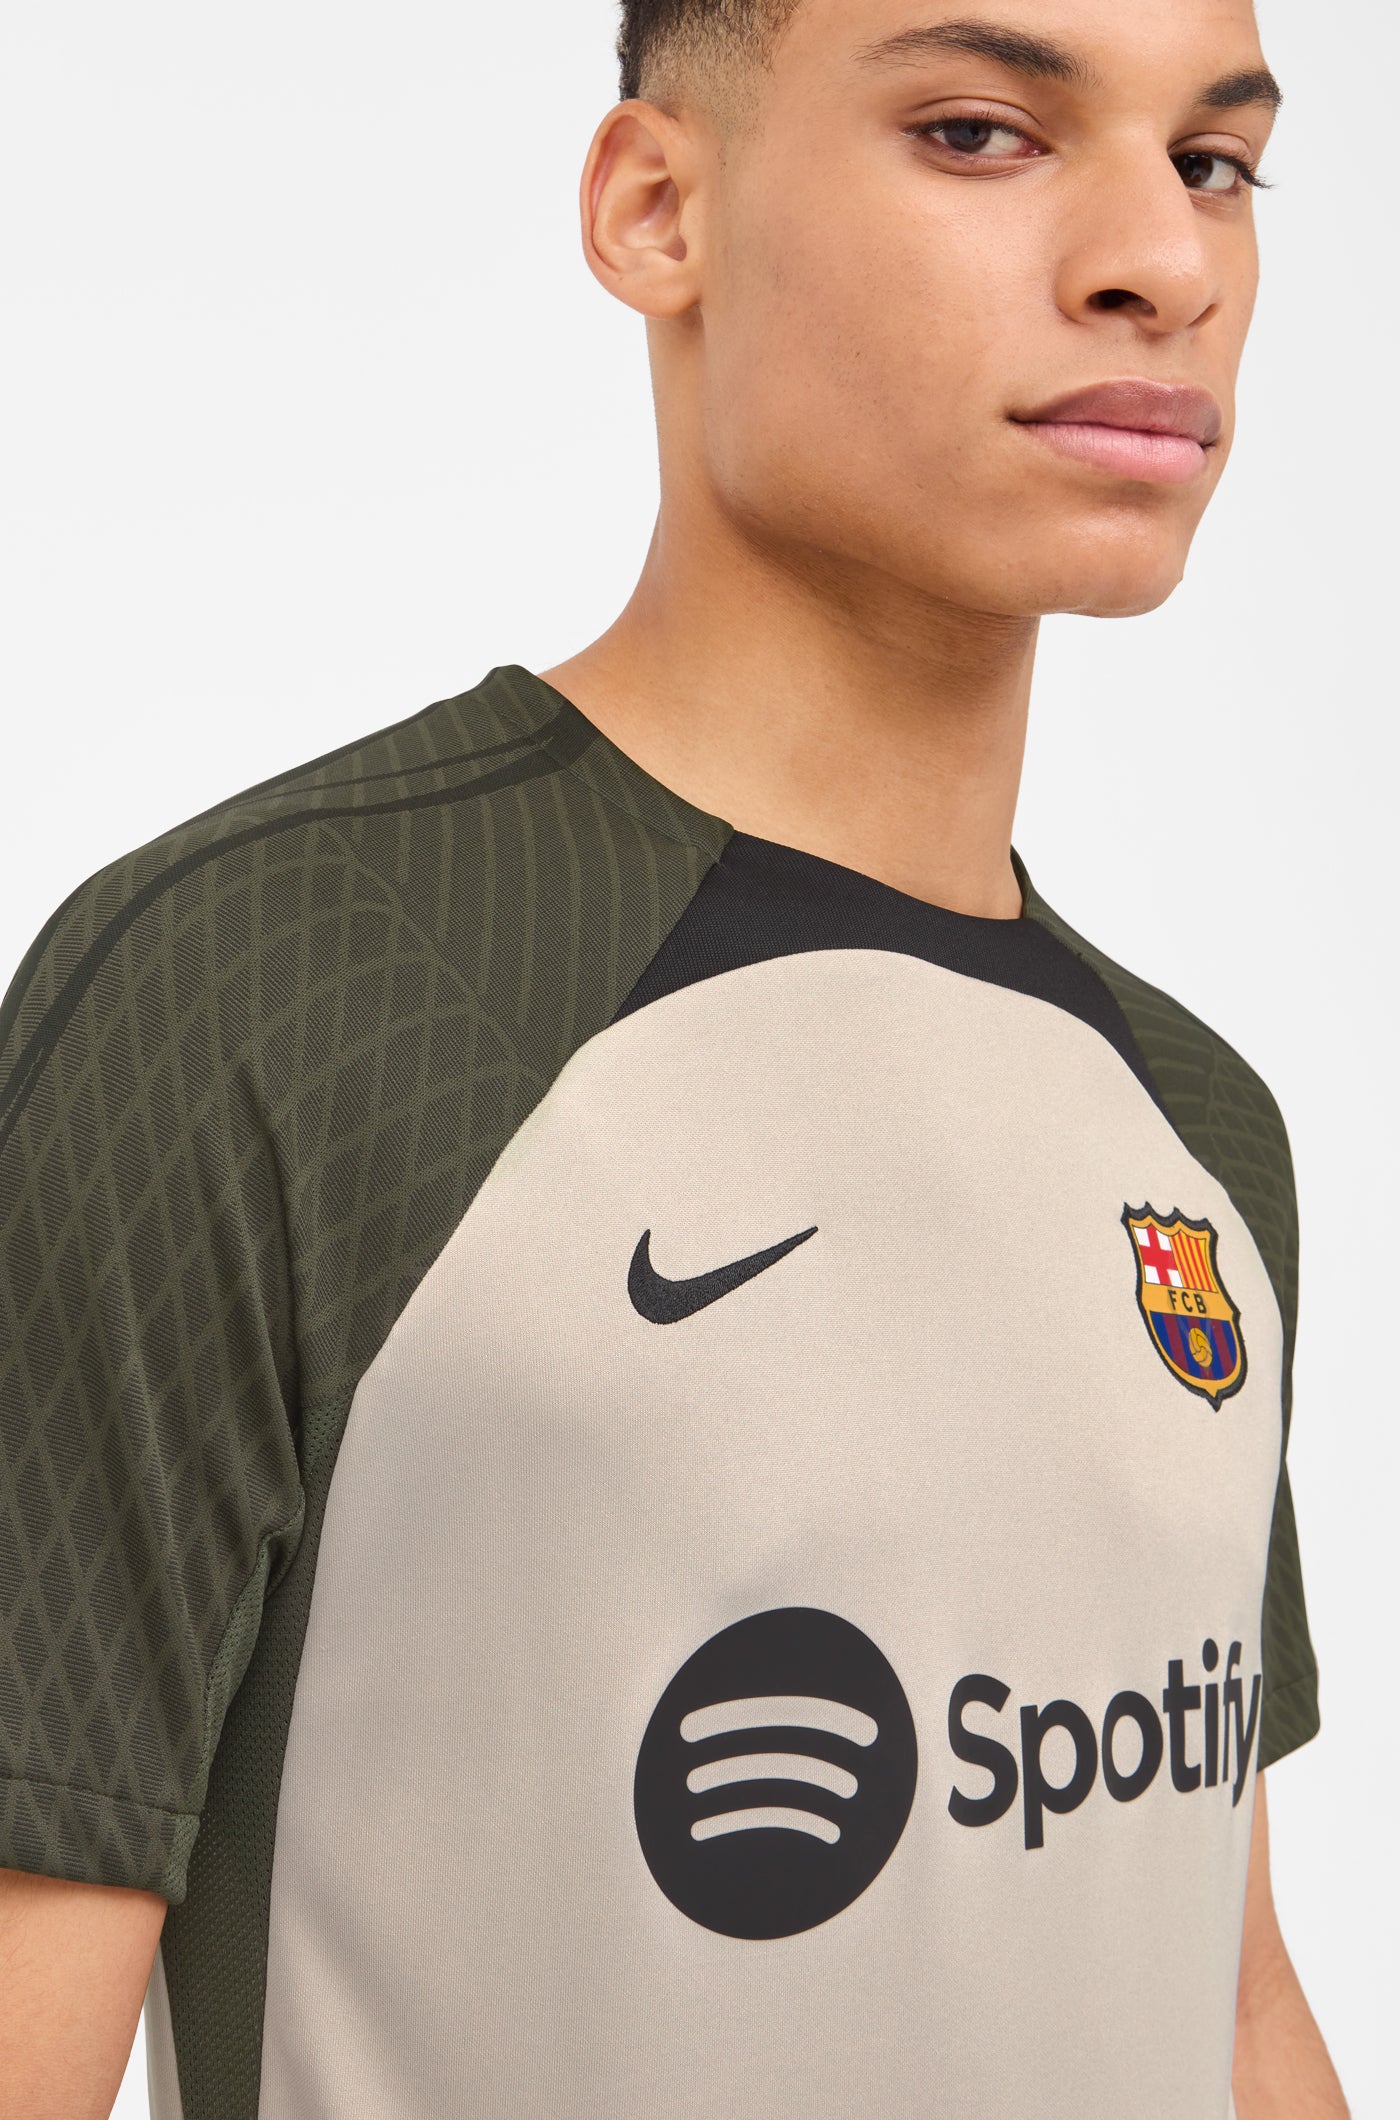 Training Shirt FC Barcelona 23/24 – Barça Official Spotify Camp Nou